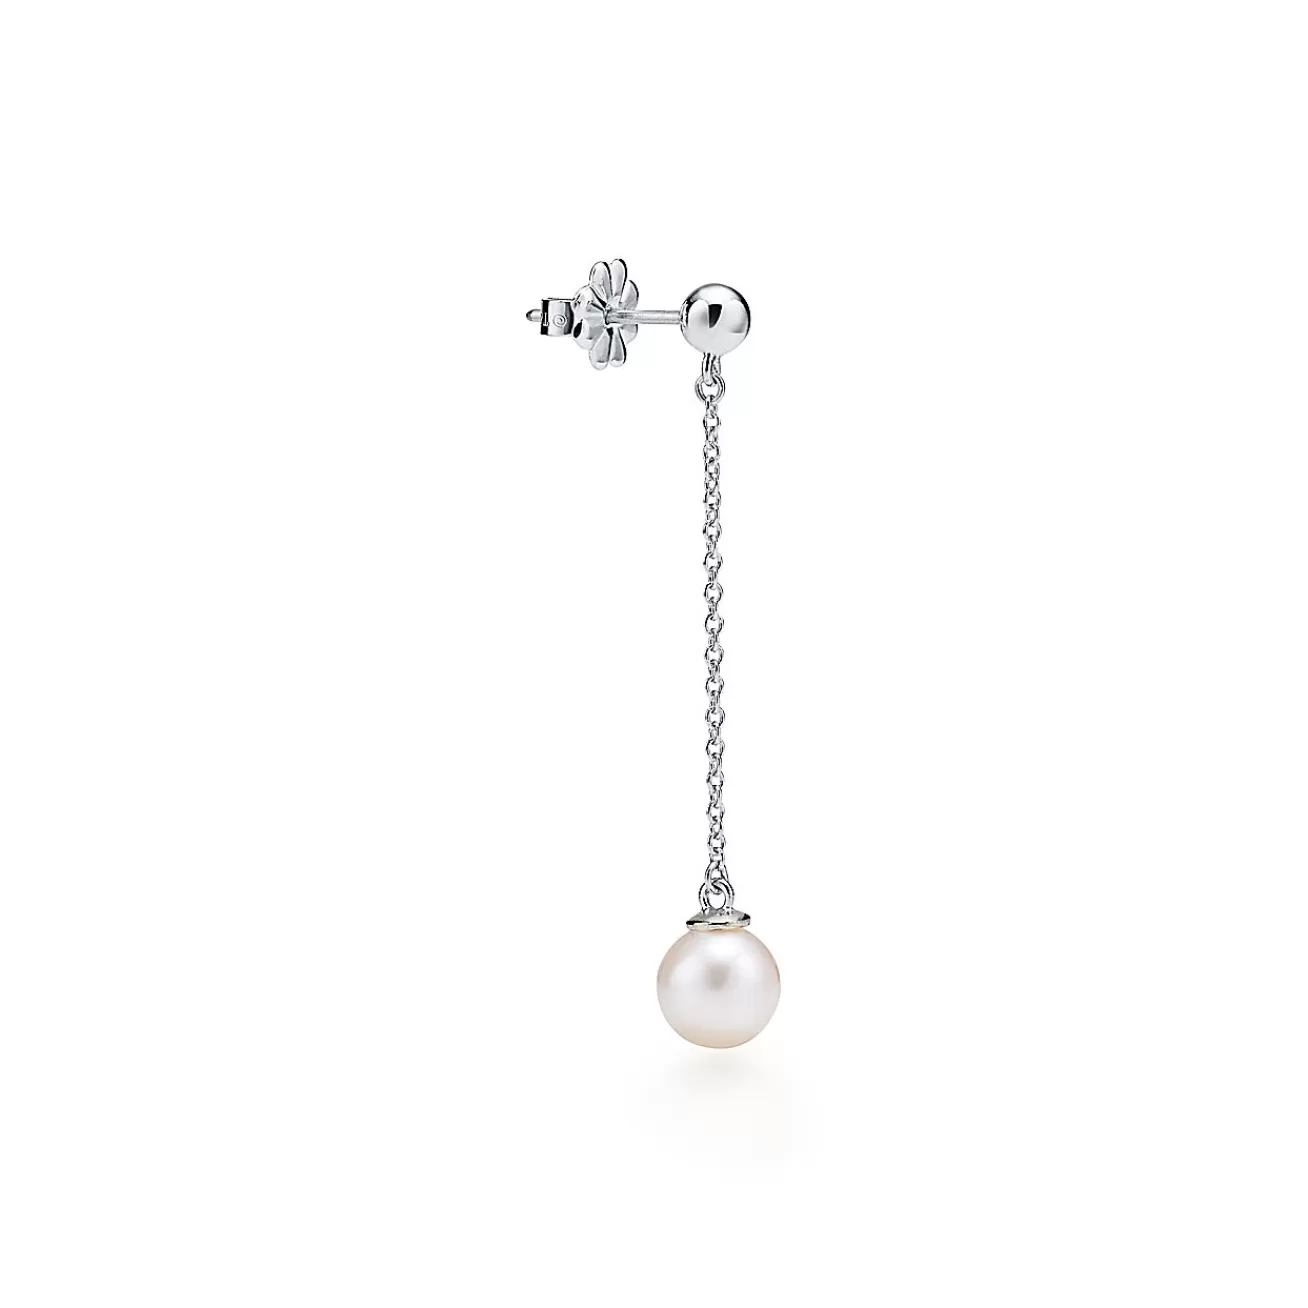 Tiffany & Co. Ziegfeld Collection drop earrings in sterling silver with pearls. | ^ Earrings | Sterling Silver Jewelry